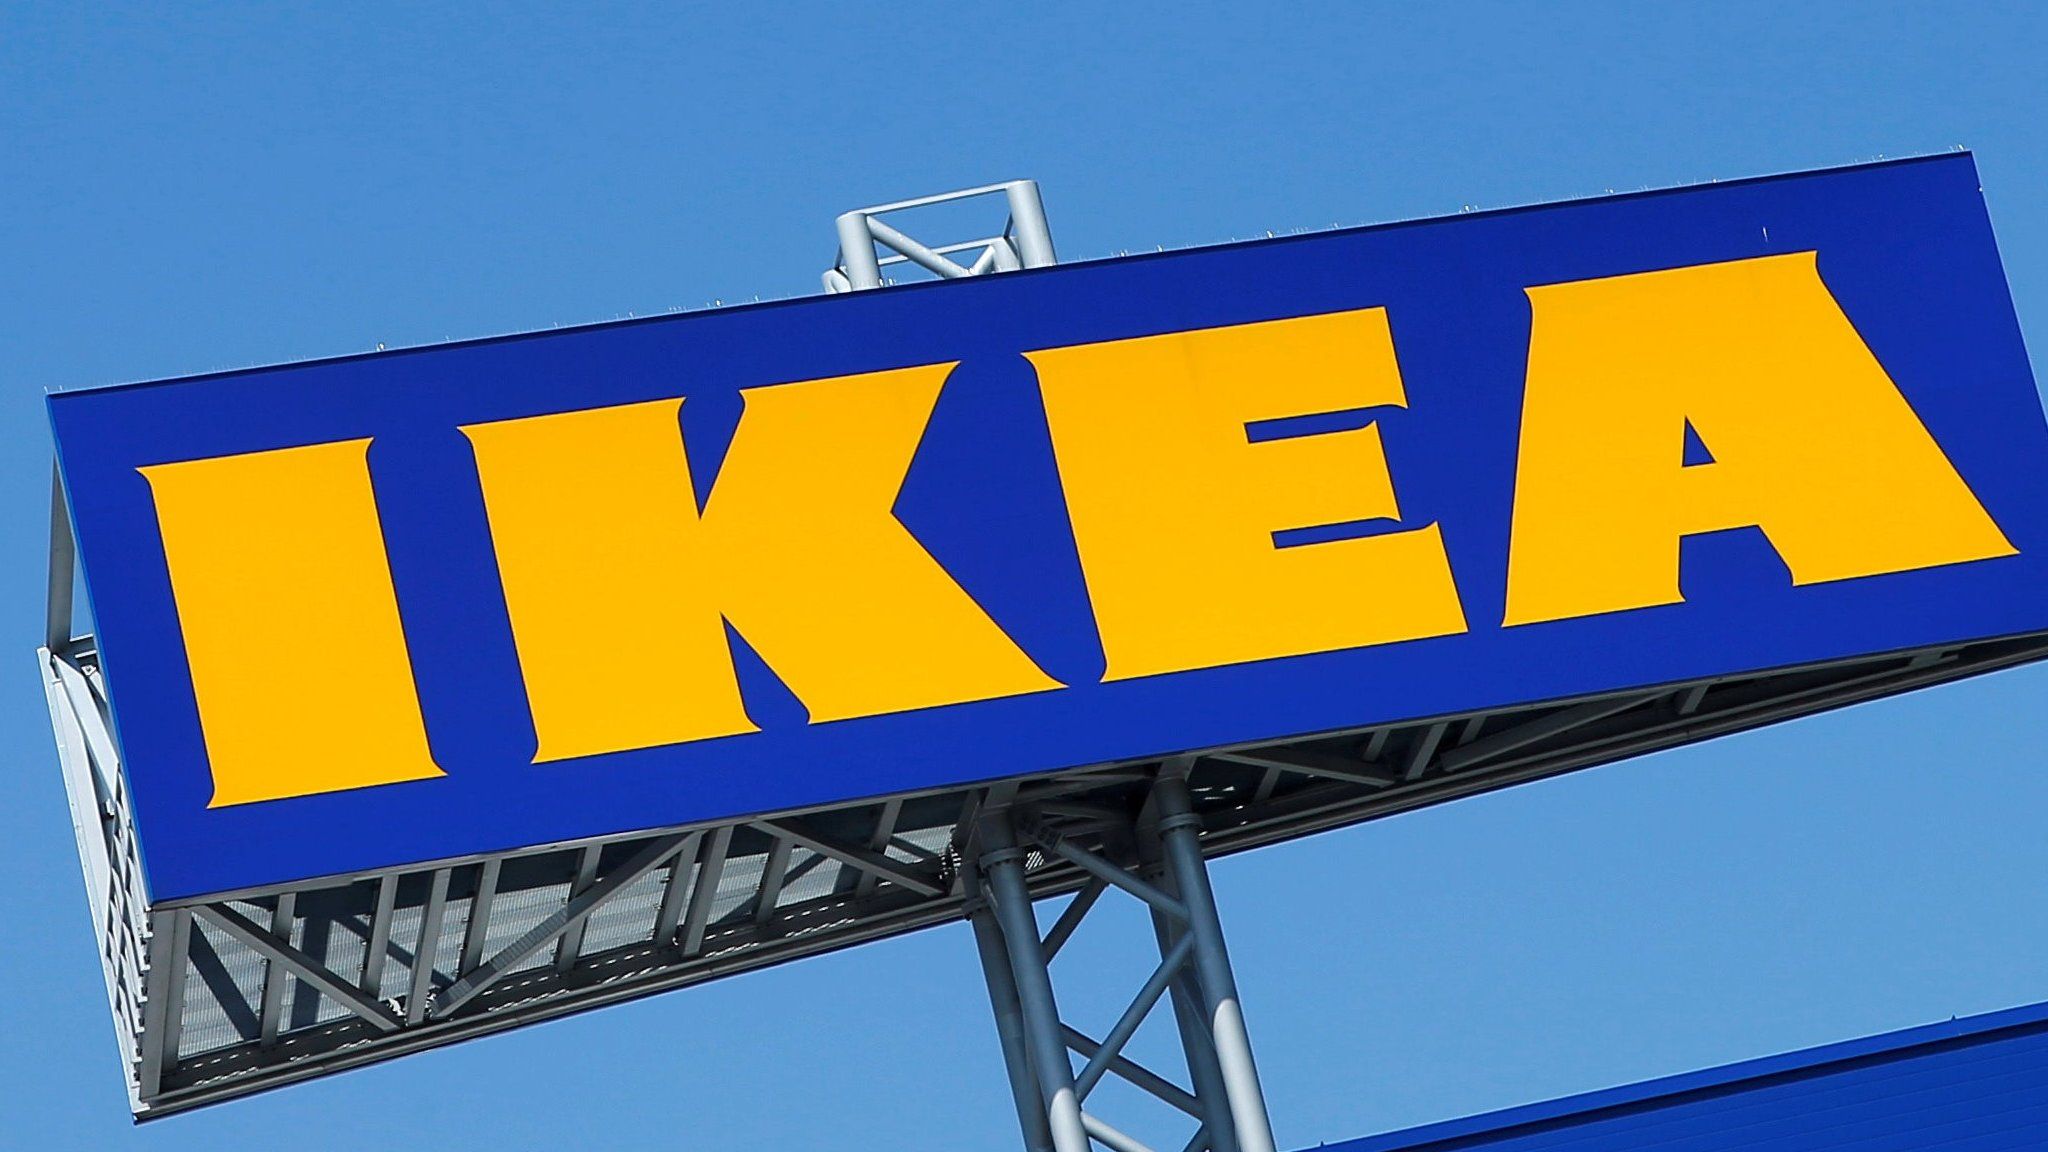 Ikea logo above a store